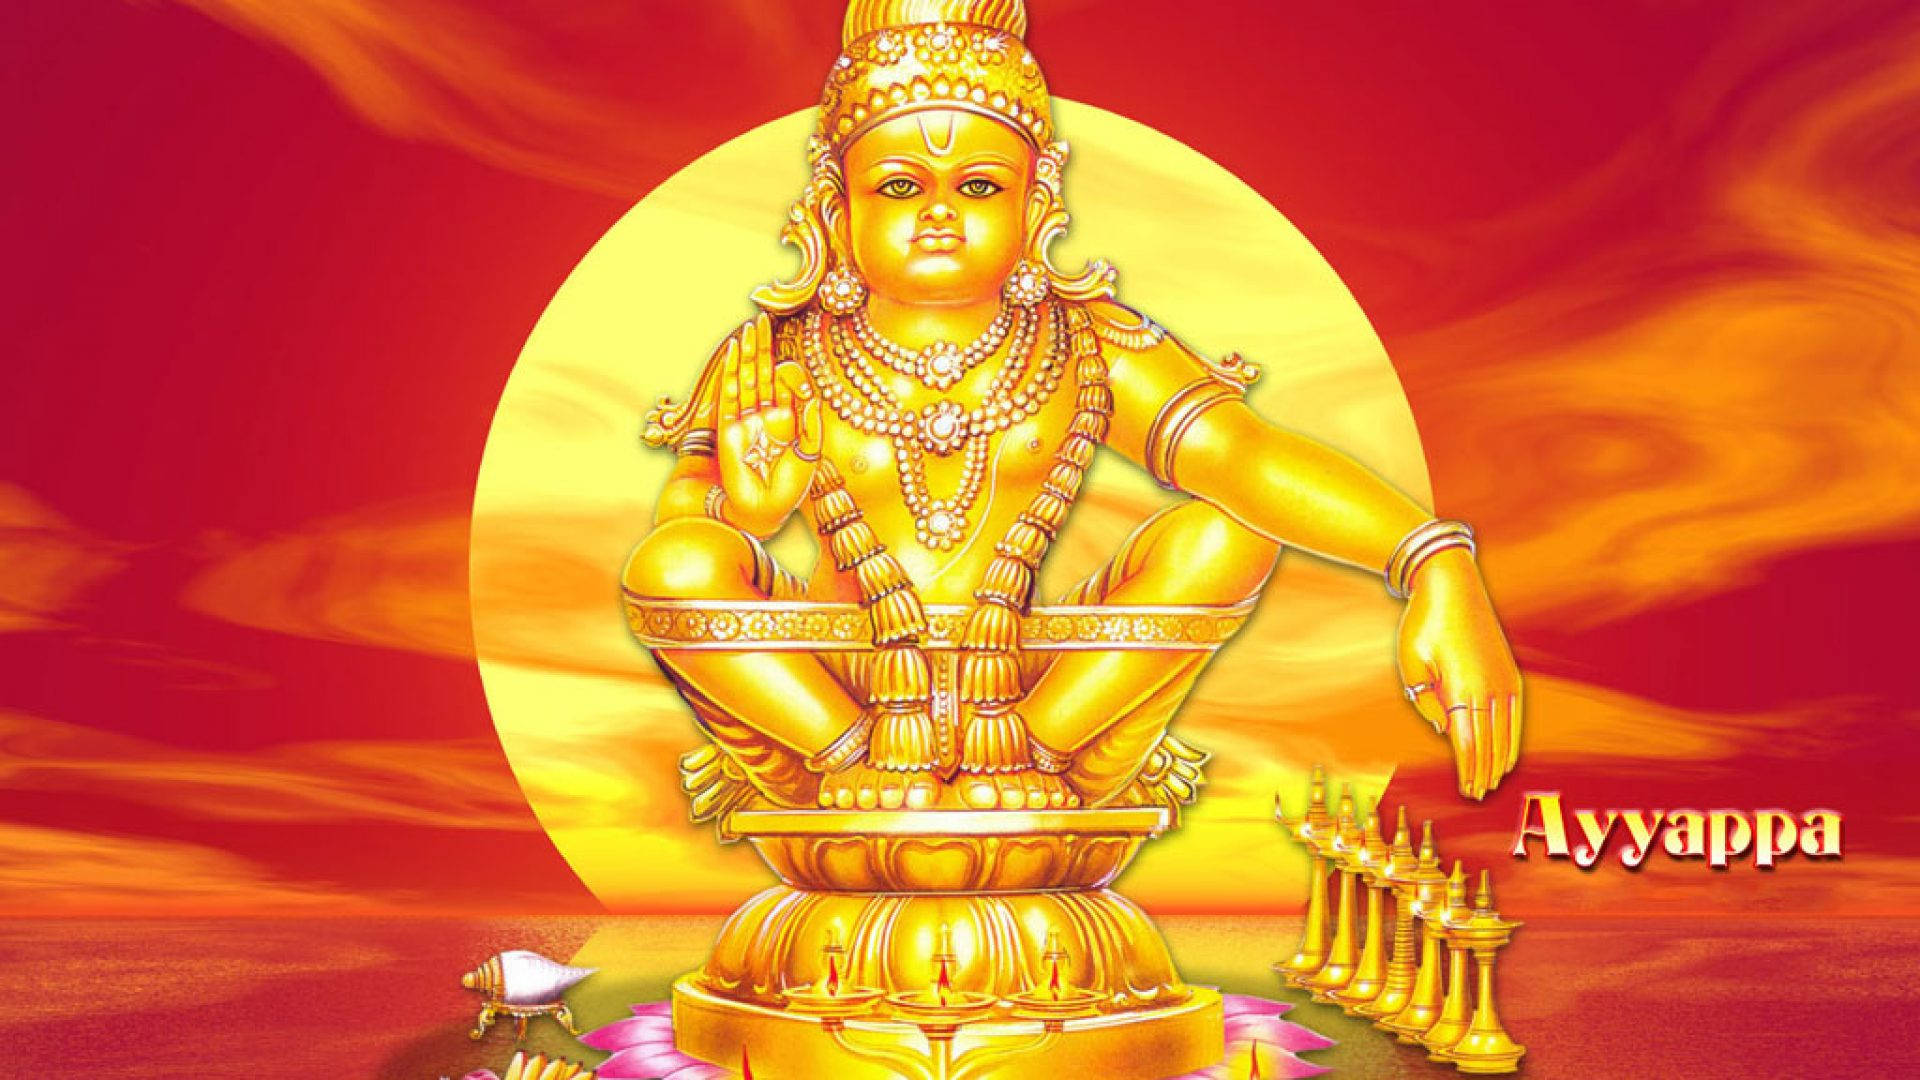 Lord Ayyappa On Sun Background